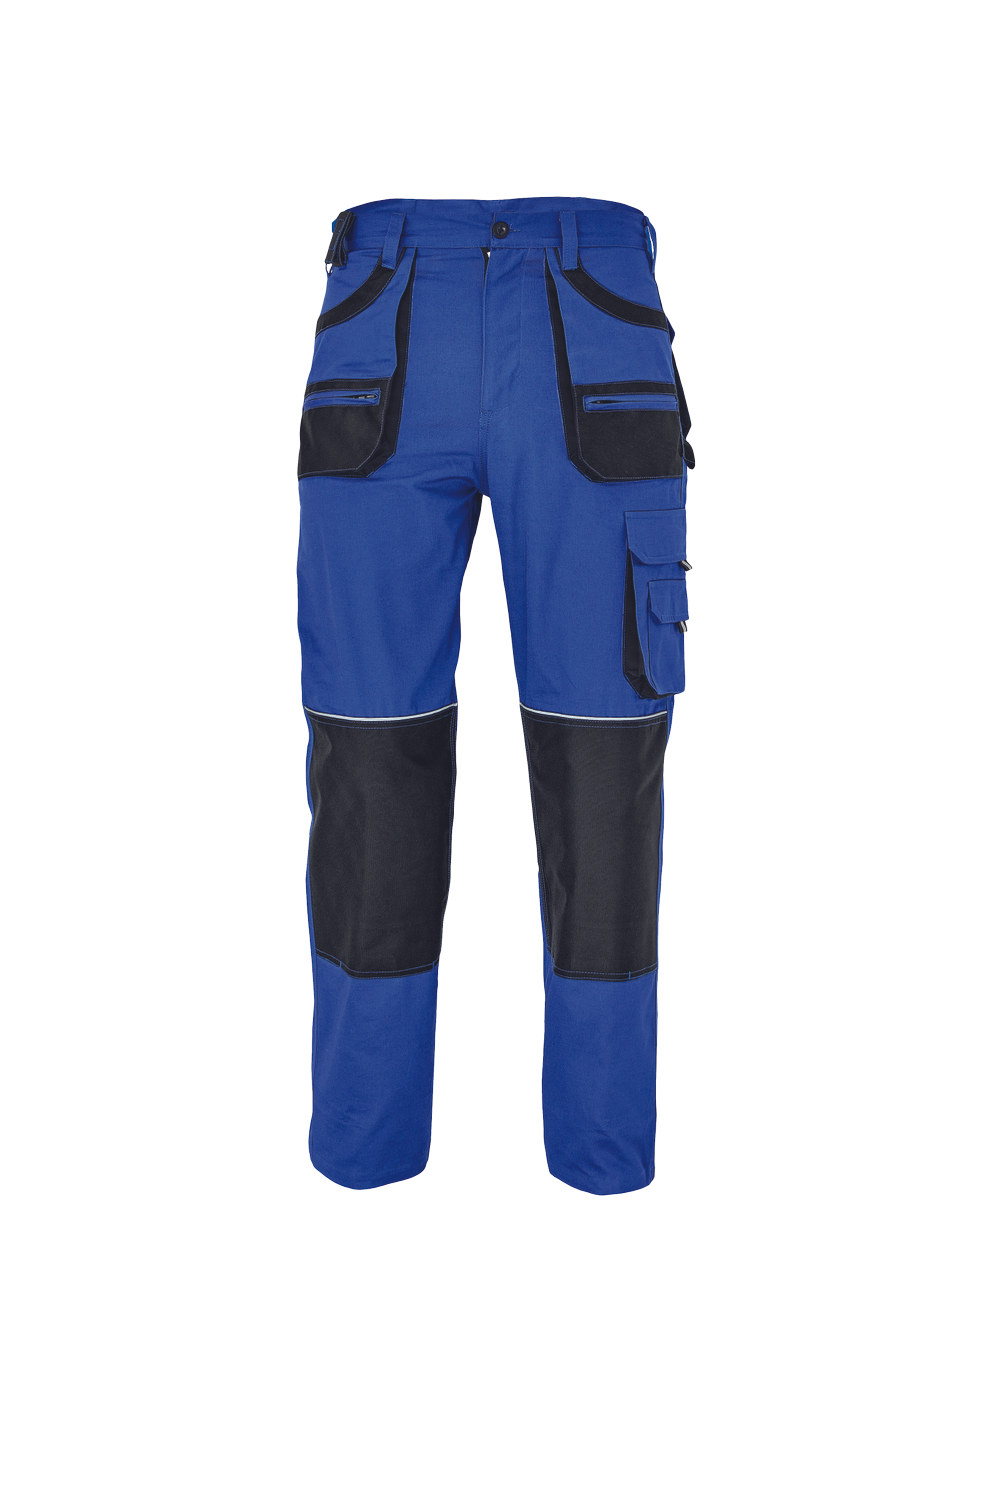 Pantaloni Standard Albastru-Negru Unisex Tercot 235g Carl - 46